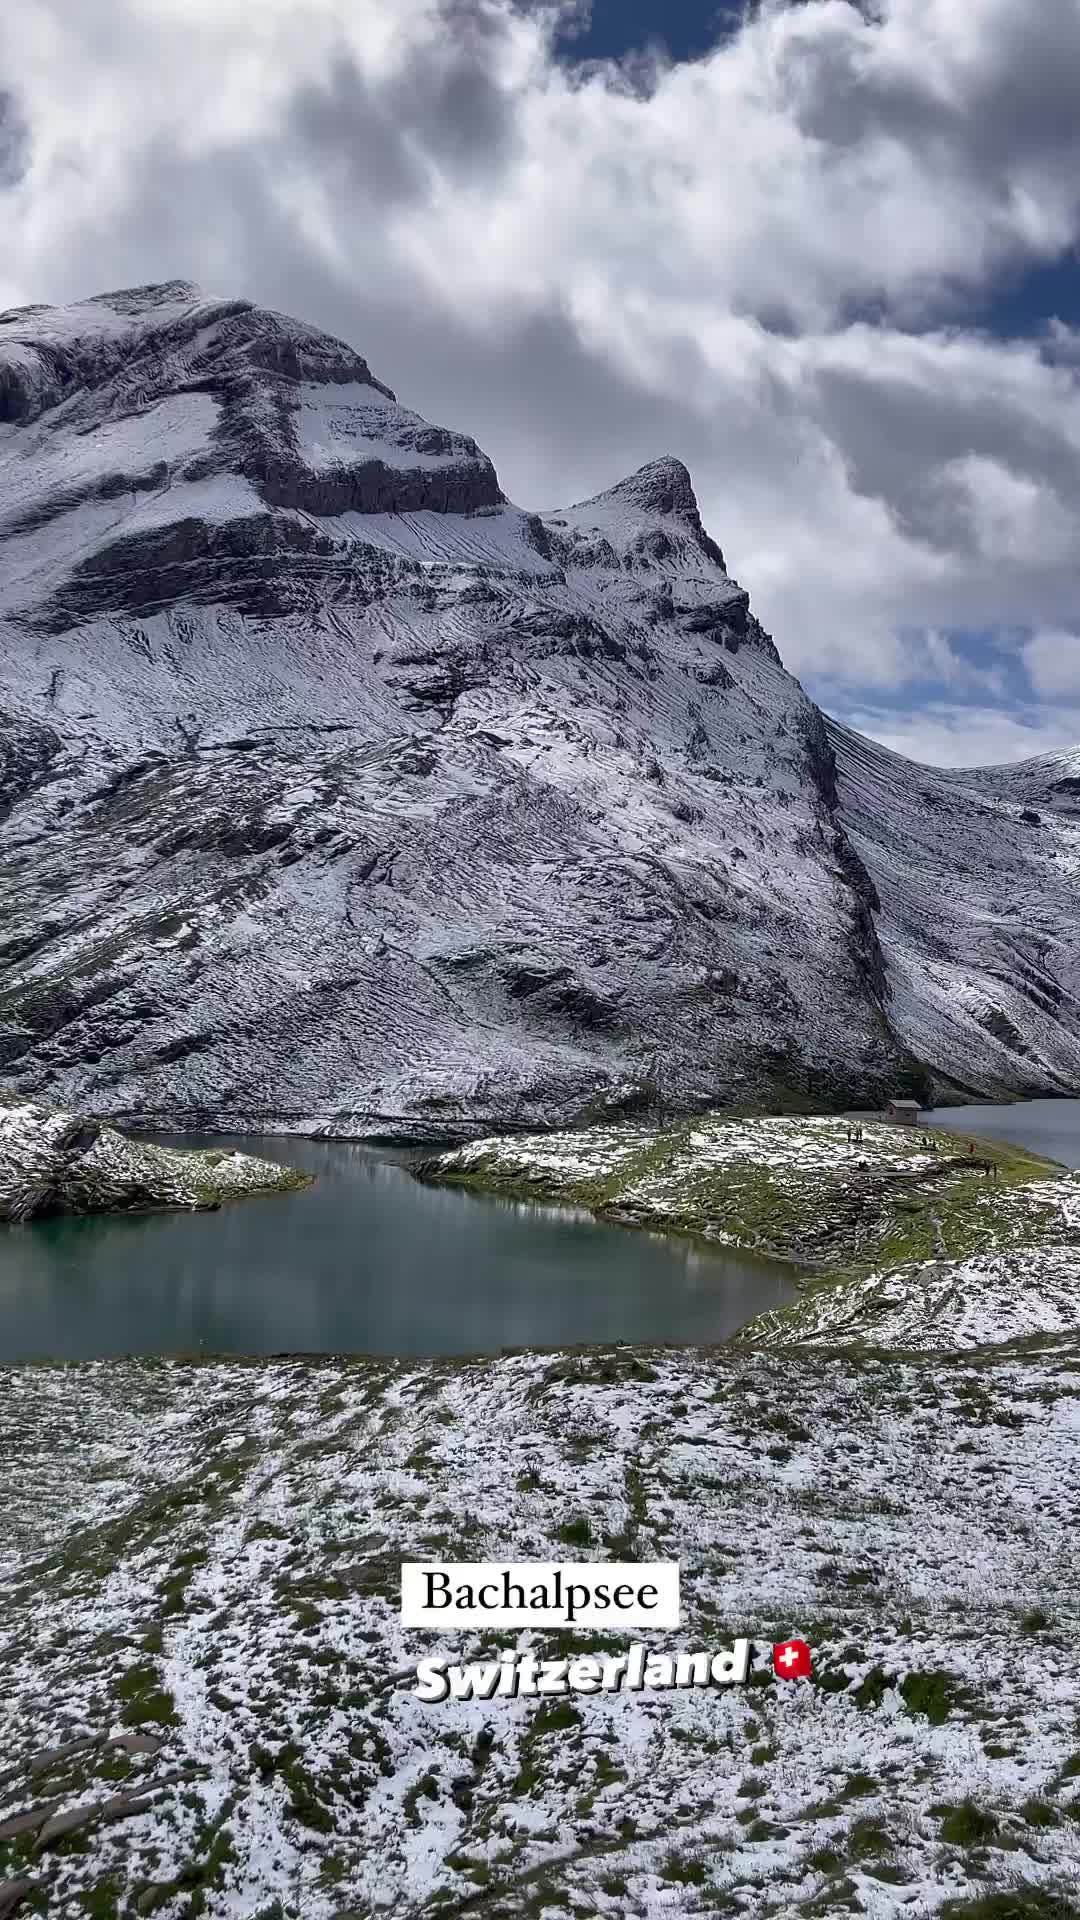 Addicted to Bachalpsee: Switzerland's Alpine Gem